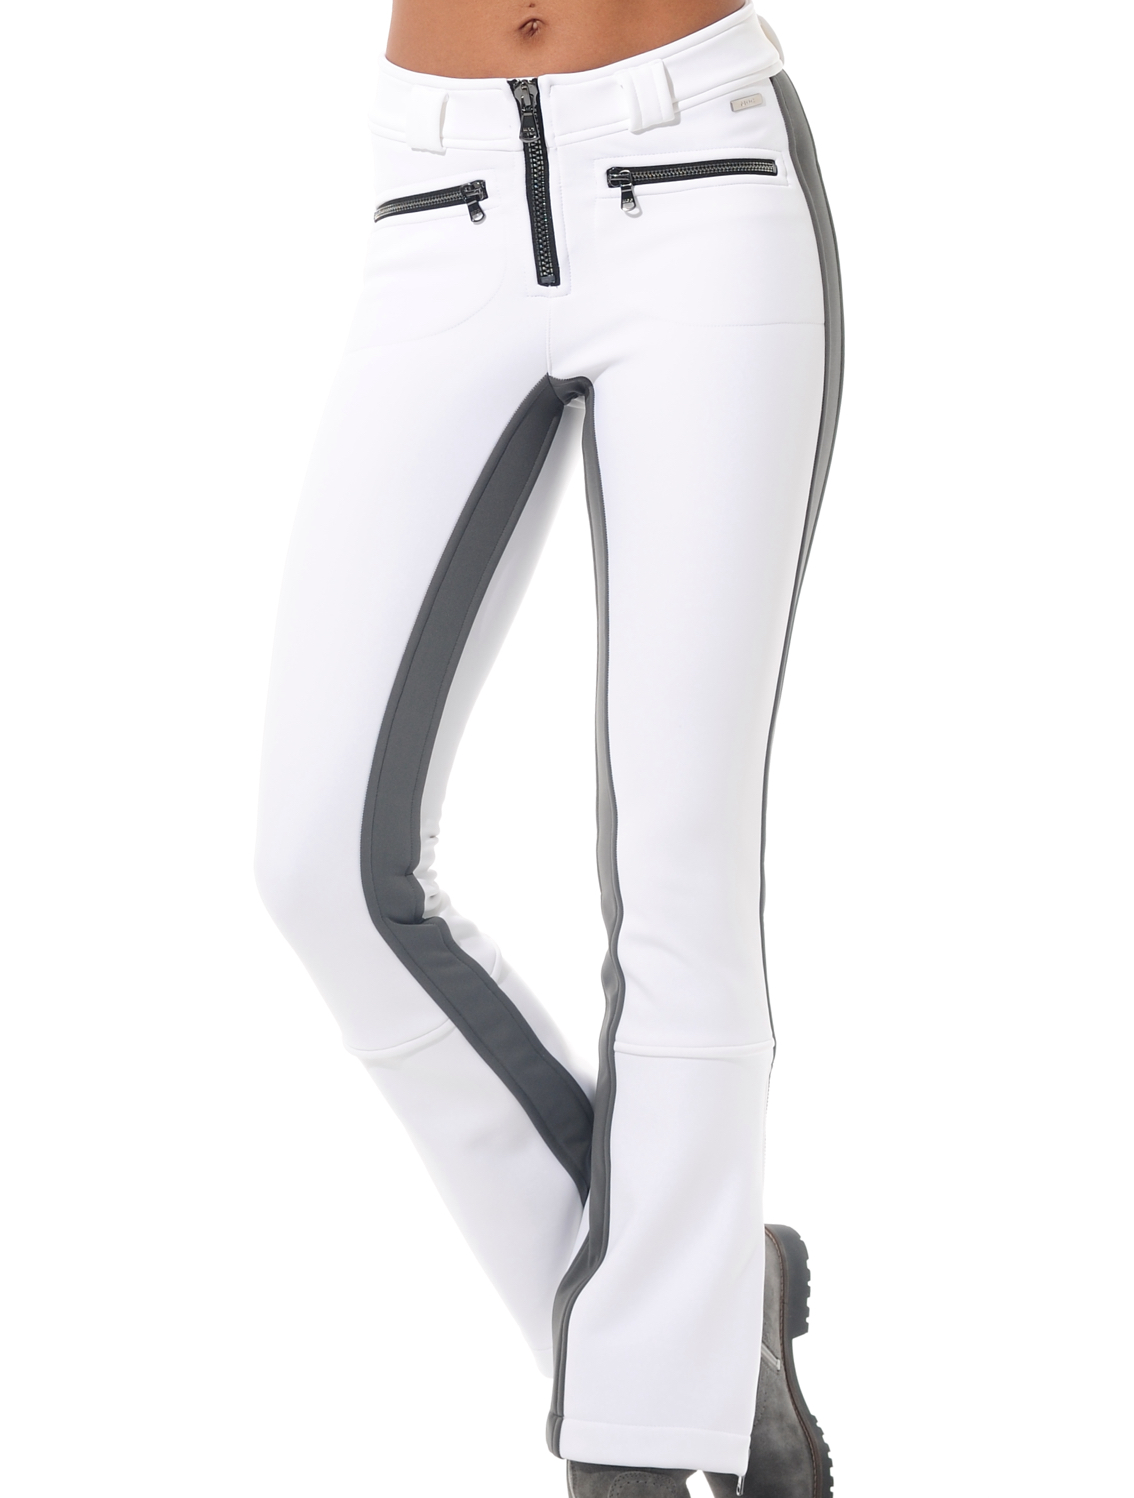 4way stretch jet pants white/steel 